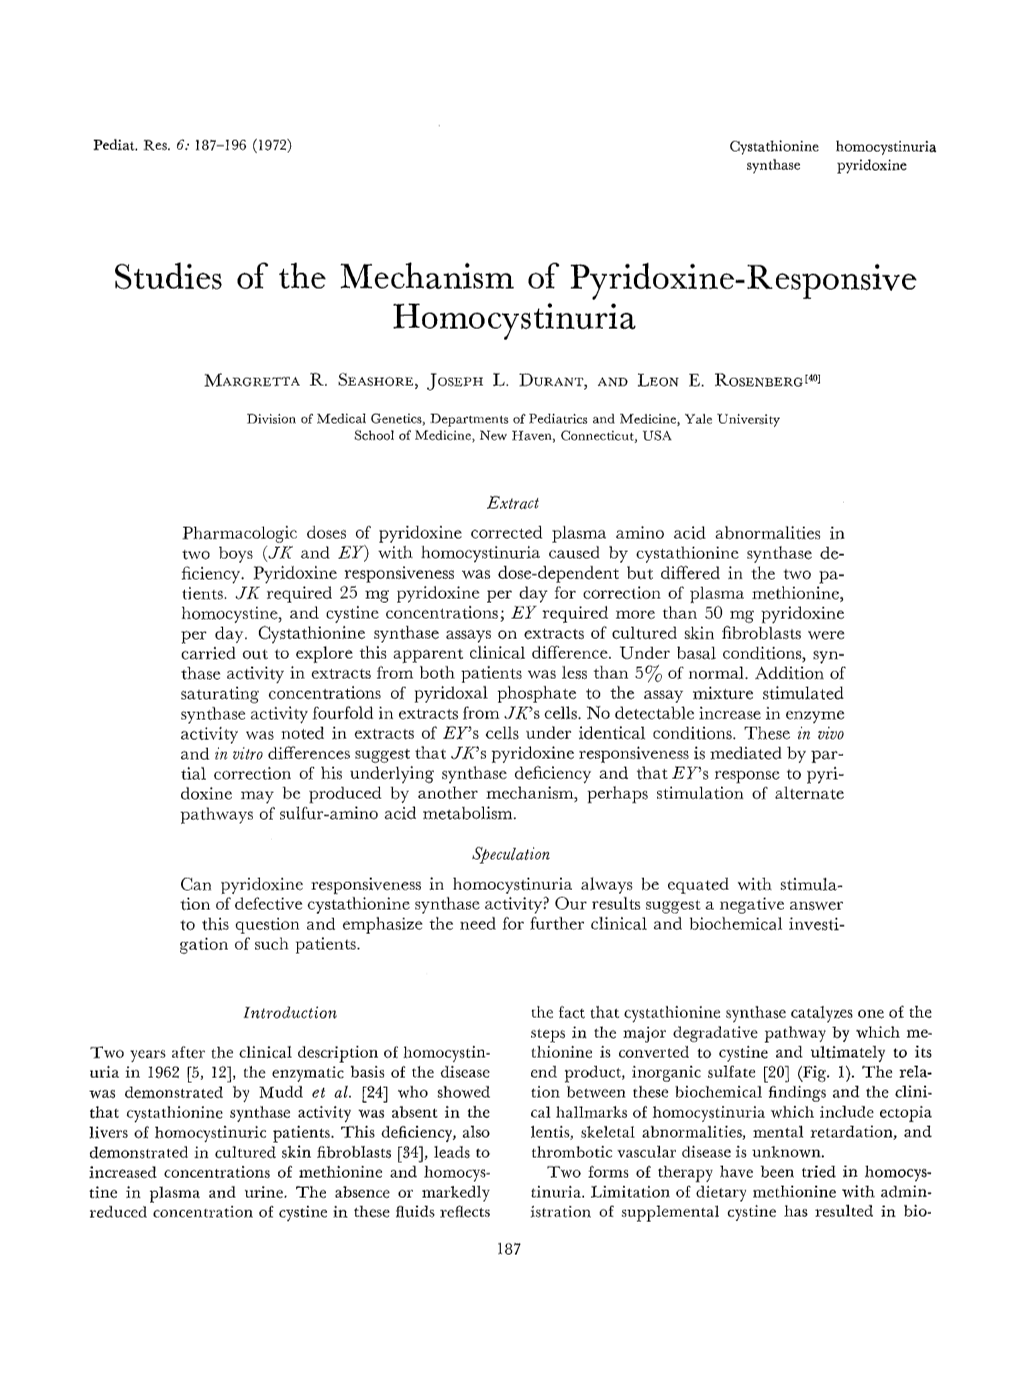 Studies of the Mechanism of Pyridoxine-Responsive Homocystinuria